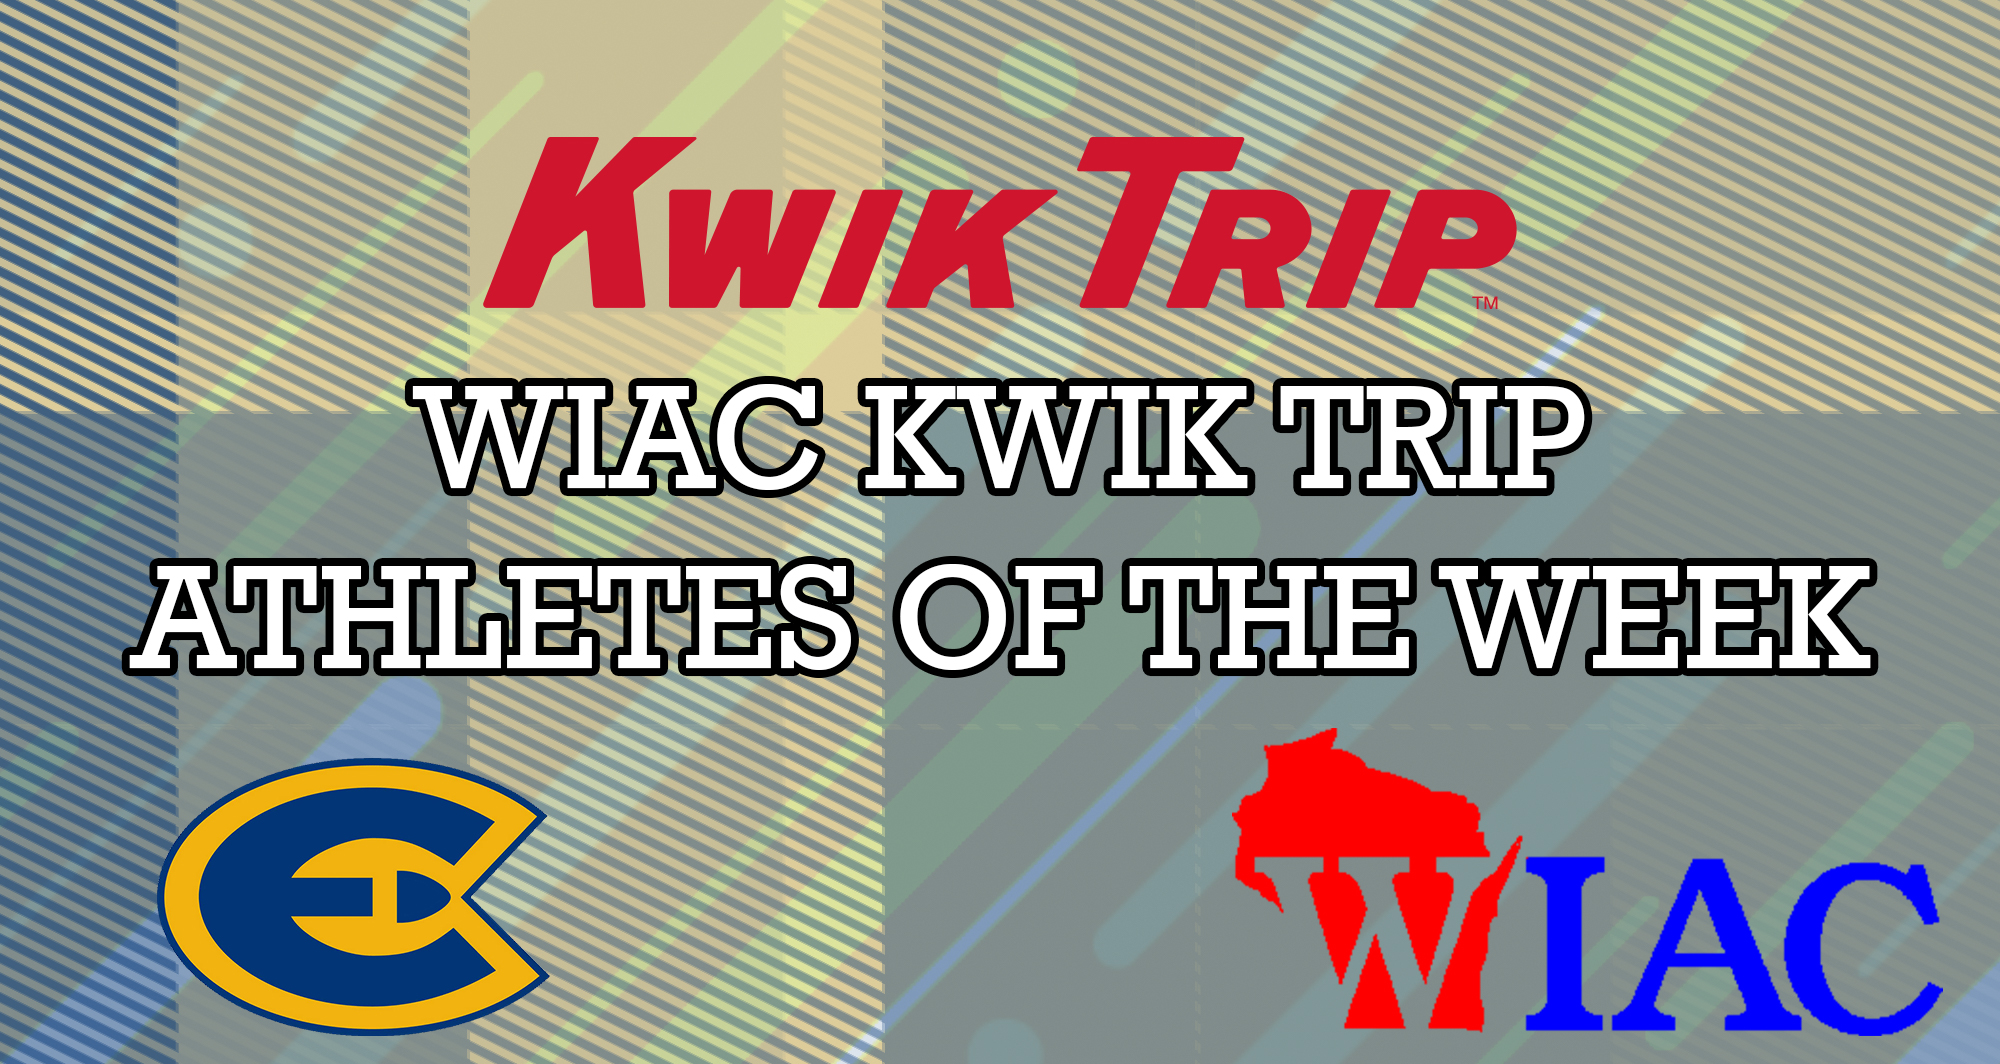 Ruden Tabbed Kwik Trip WIAC Athlete of the Week for Third Time